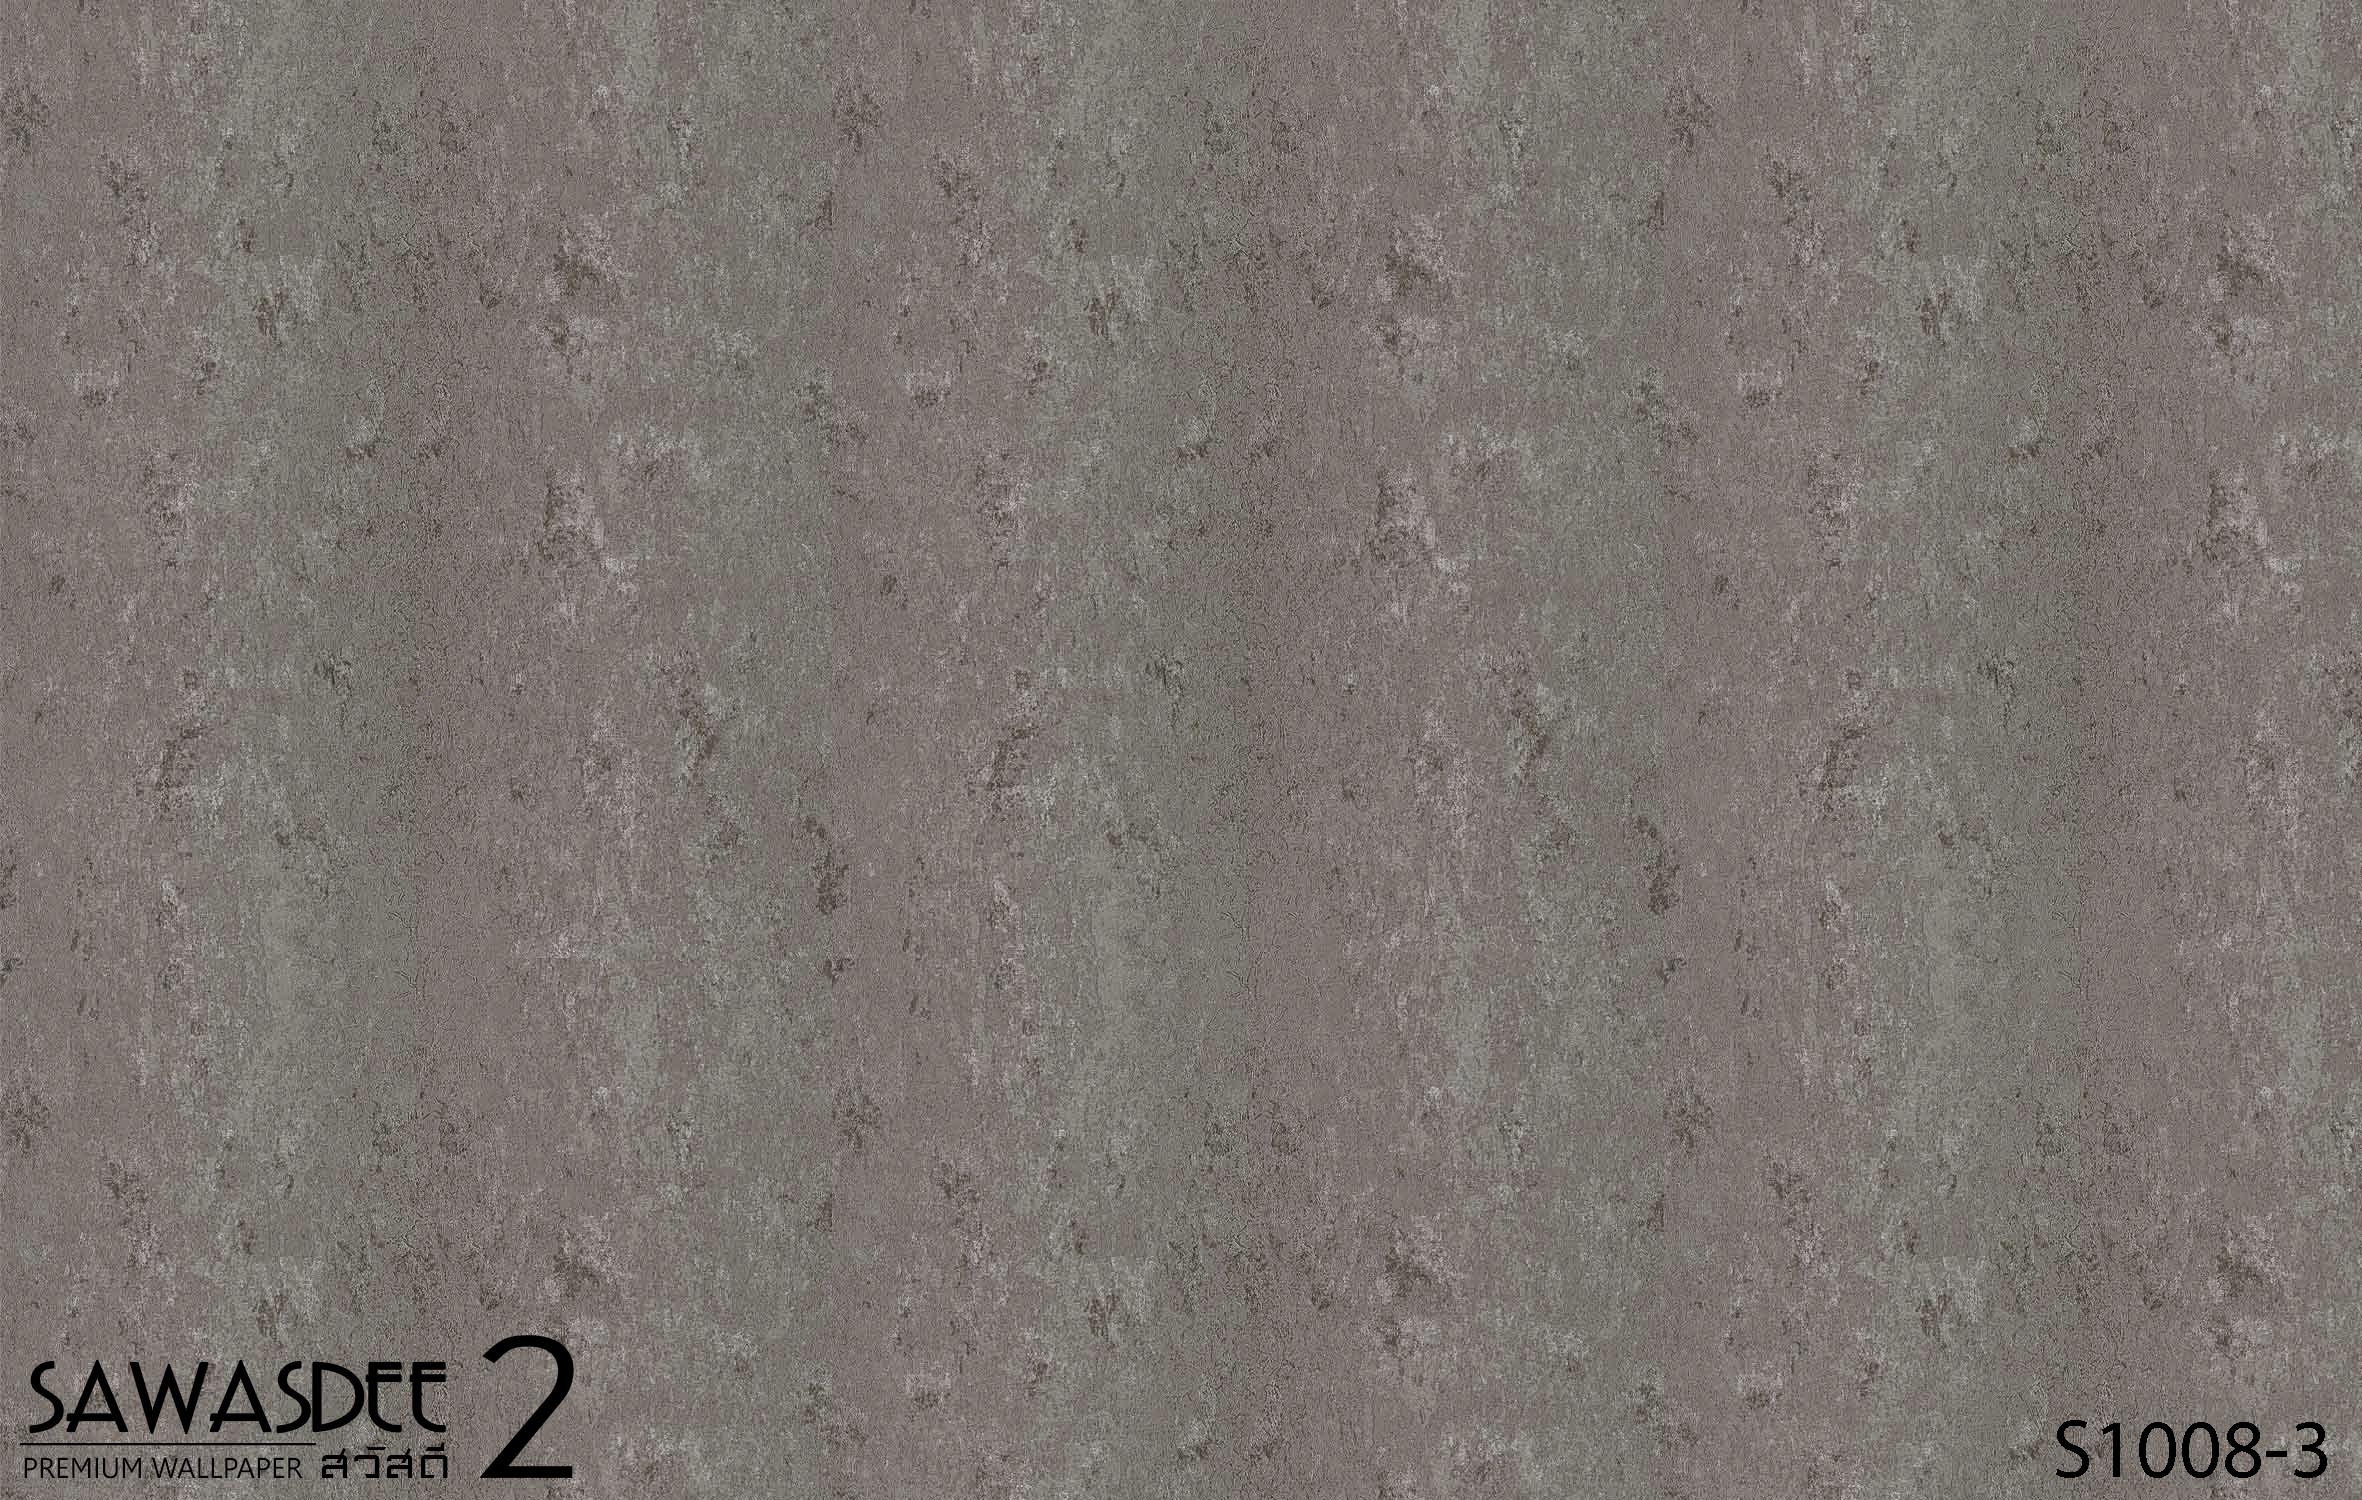 Wallpaper (SAWASDEE 2) S1008-3